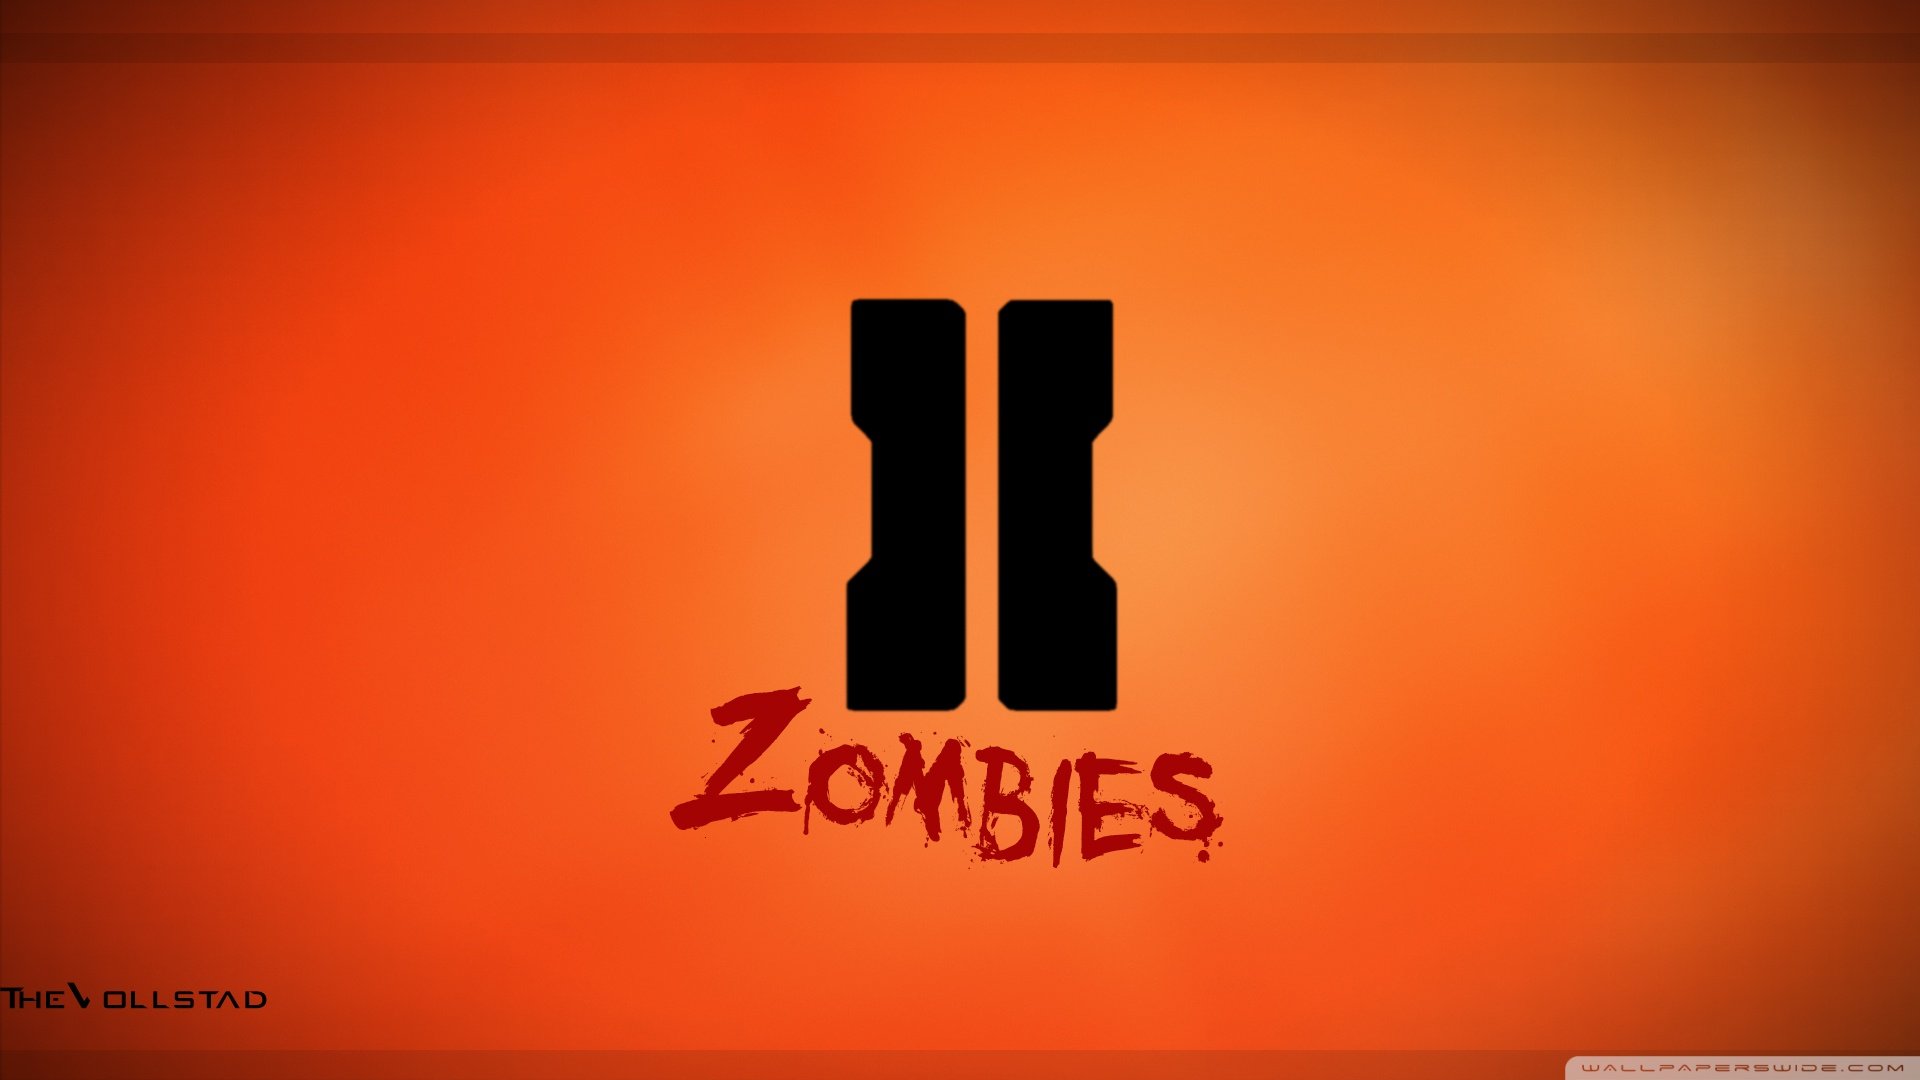 cod zombies iphone wallpaper,font,text,logo,orange,brand